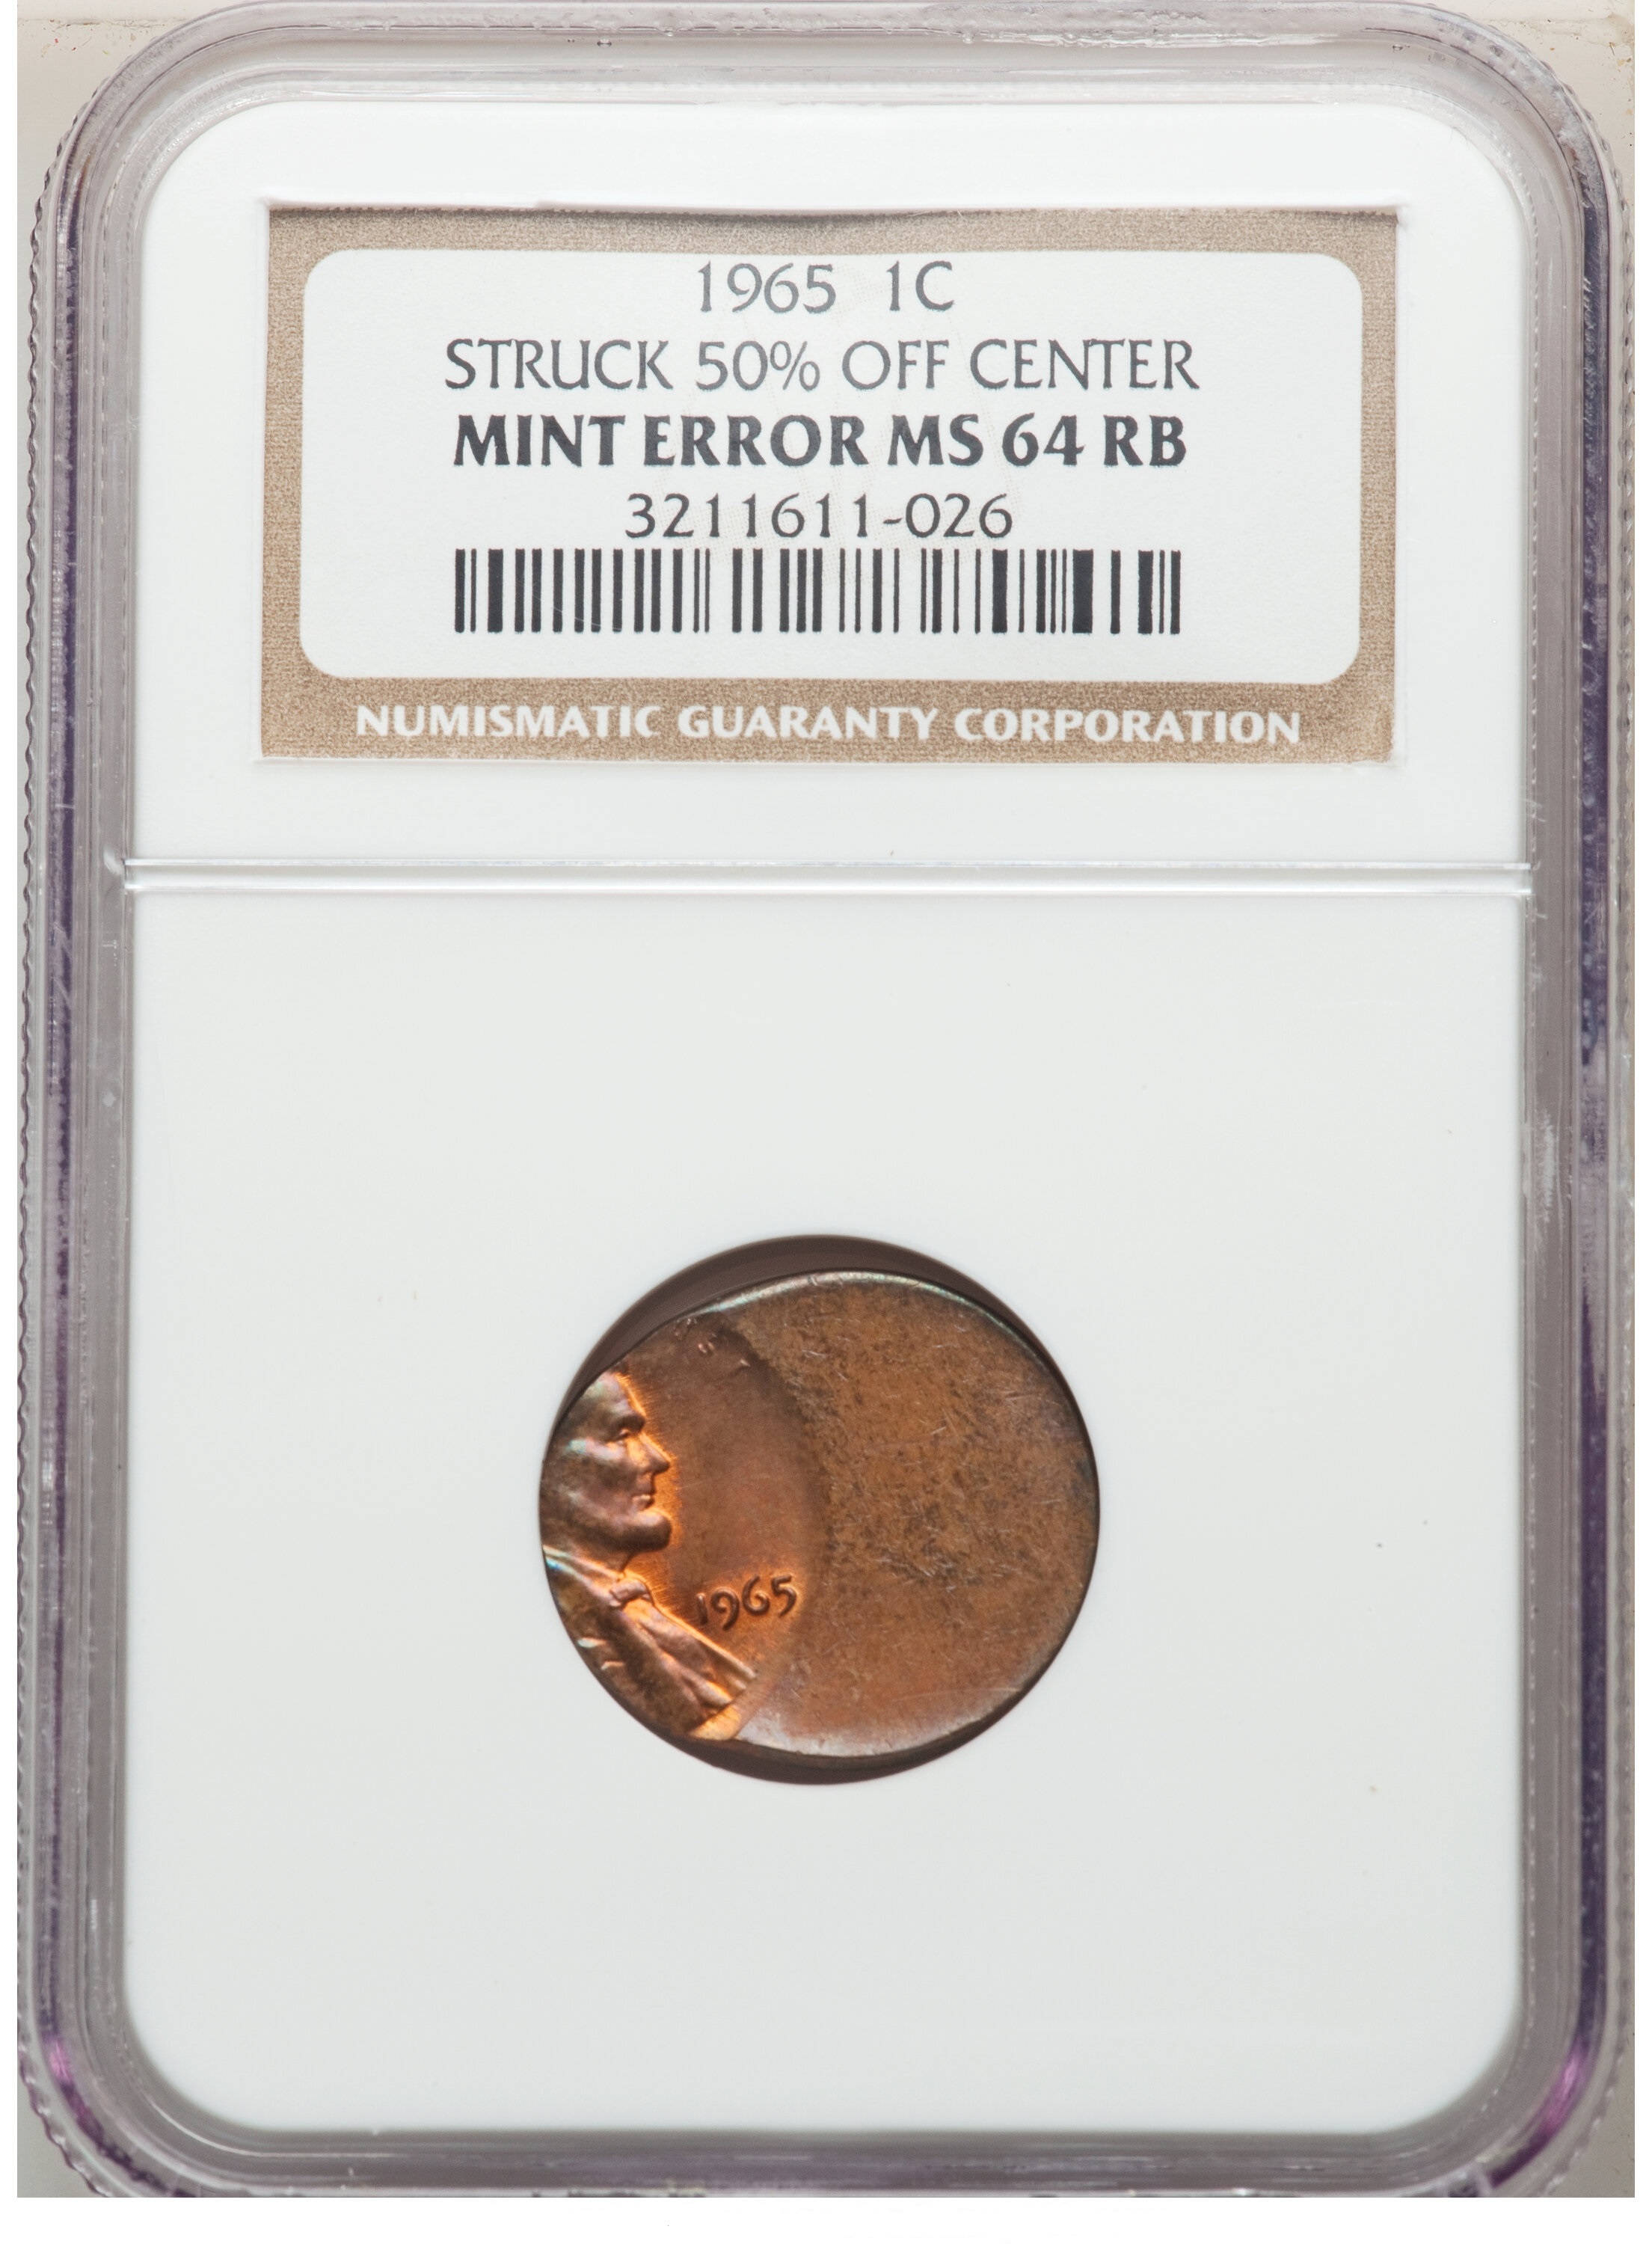 ER002 1965 1C Lincoln Cent -- Struck 50% Off Center -- NGC MS64